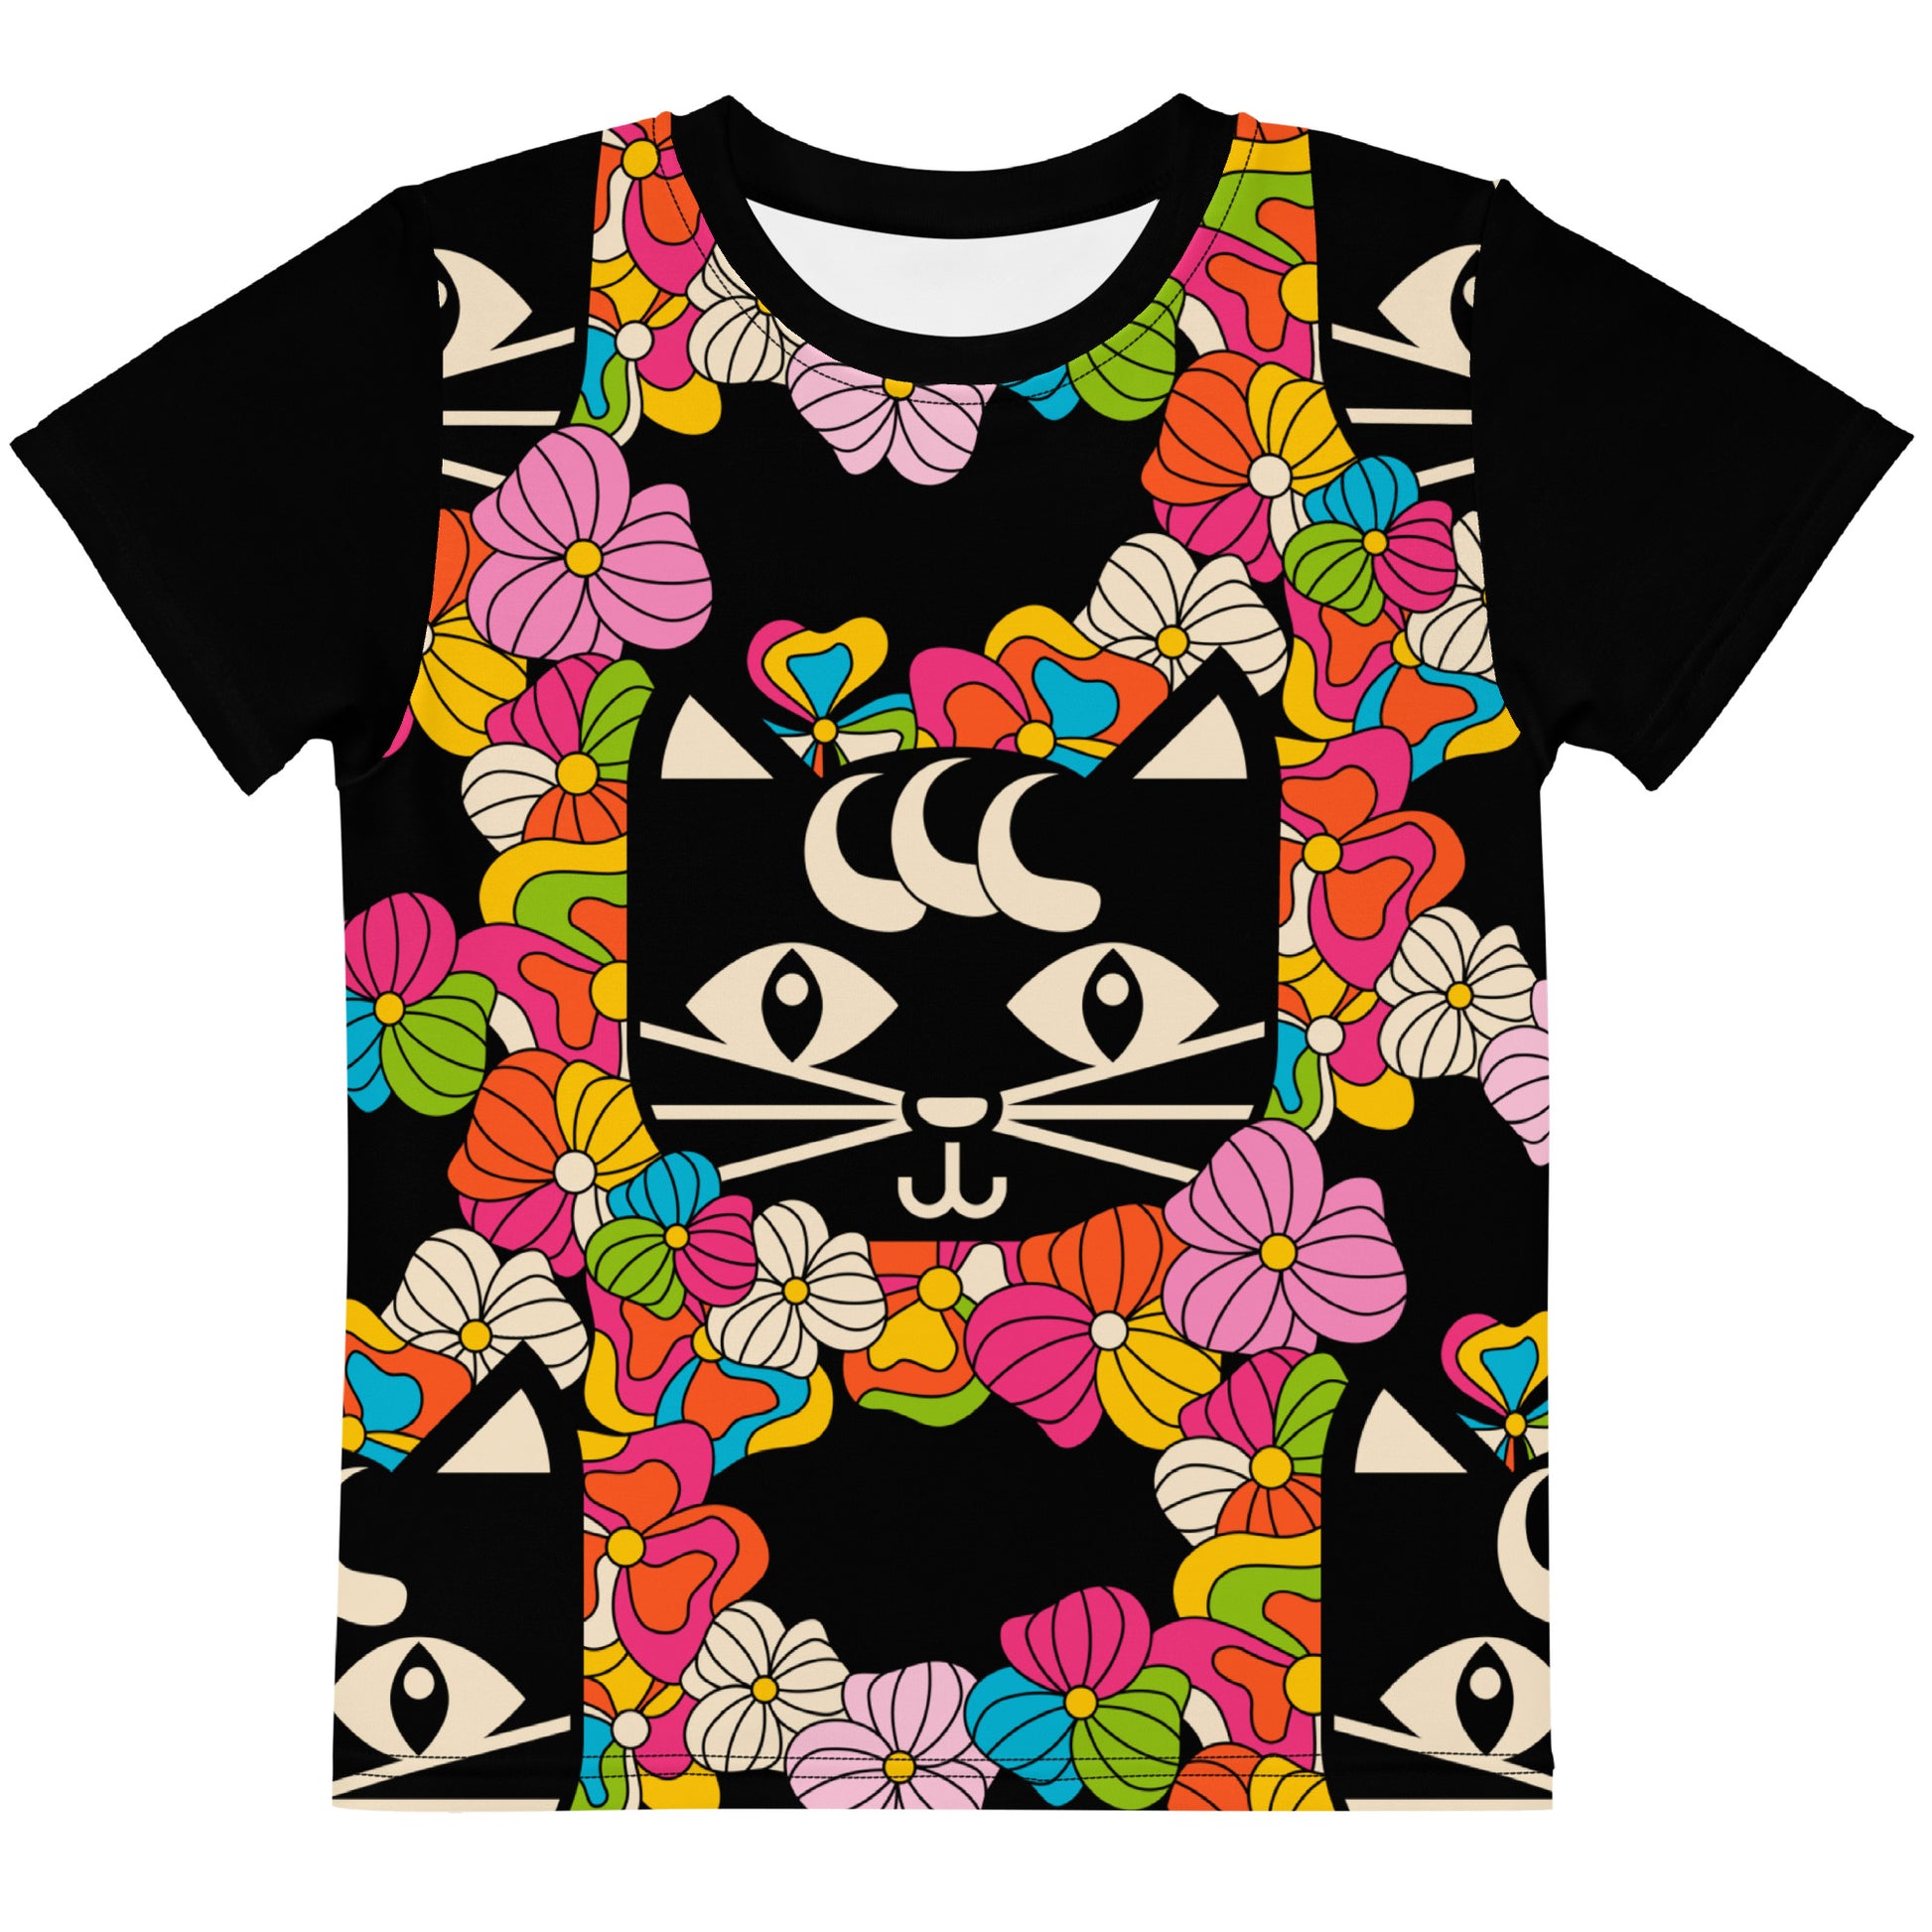 MAGICAT black - Kid's T-shirt with black cats